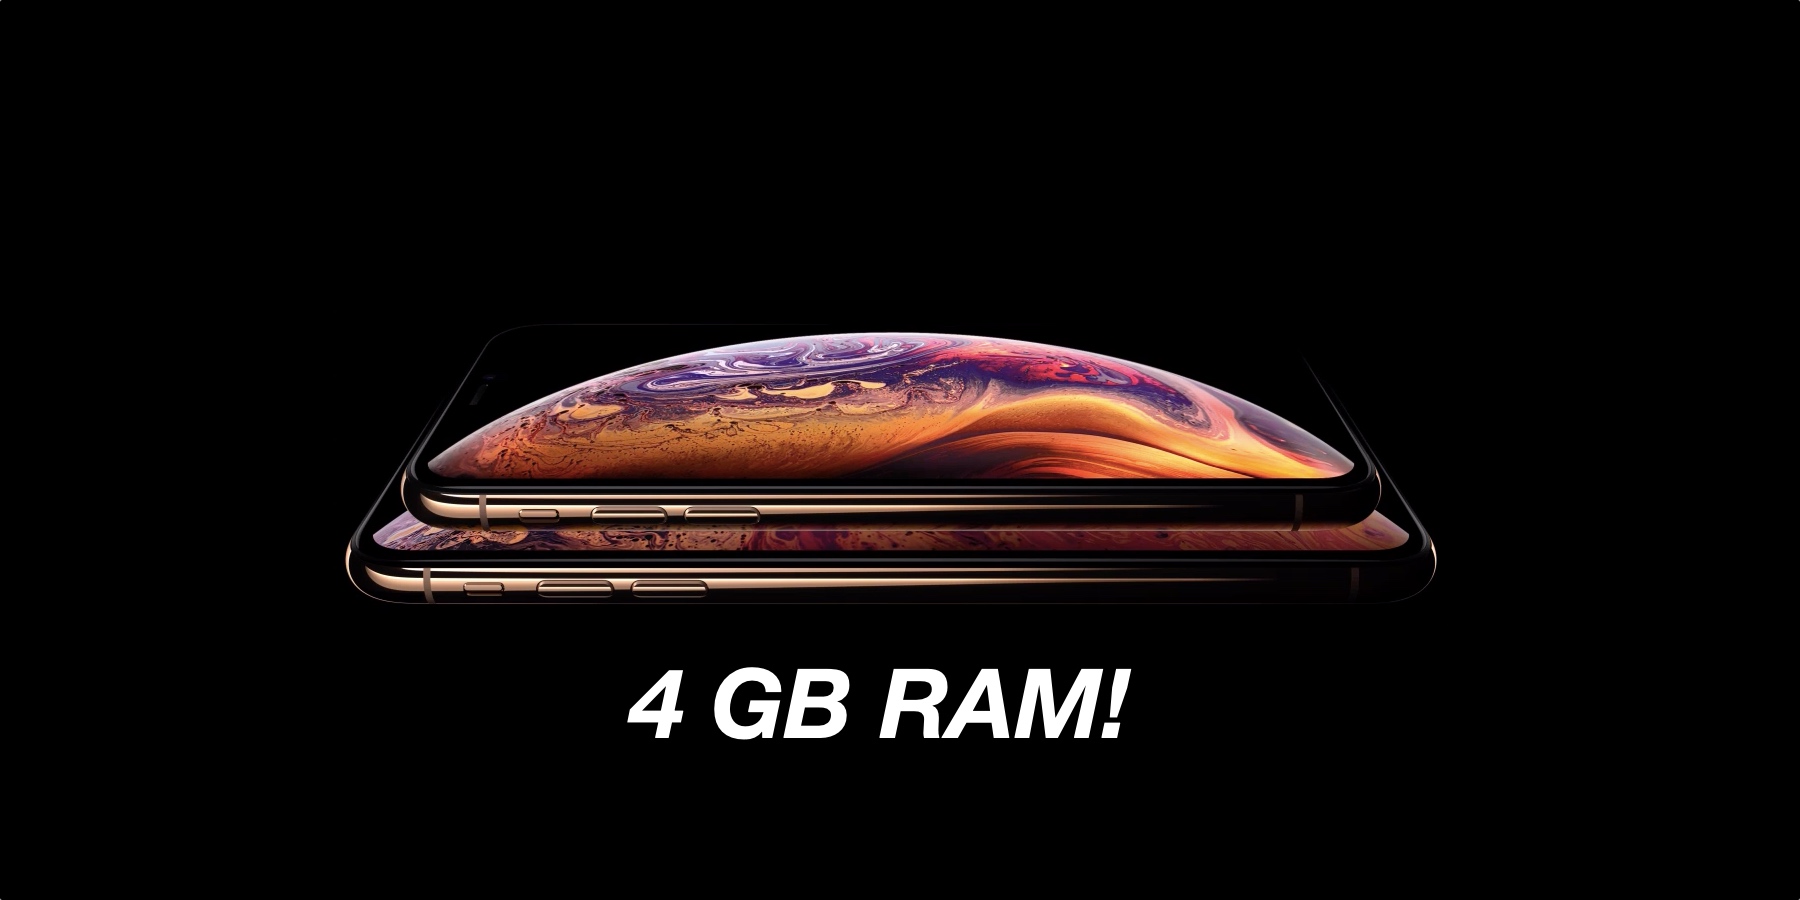 Po co nam 4 GB RAM w iPhone?